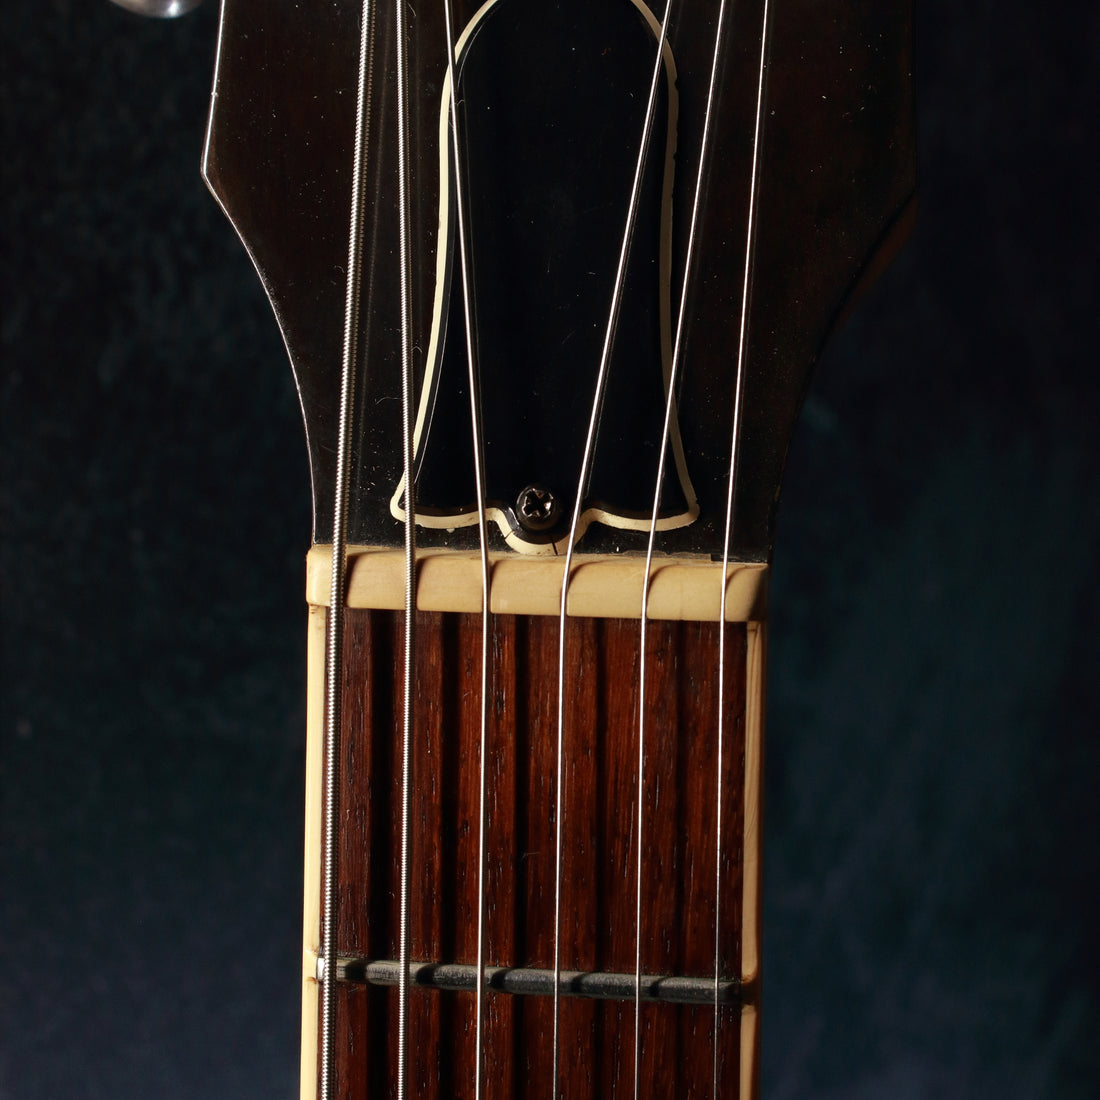 Gibson ES-335 Dot Antique Natural 1990